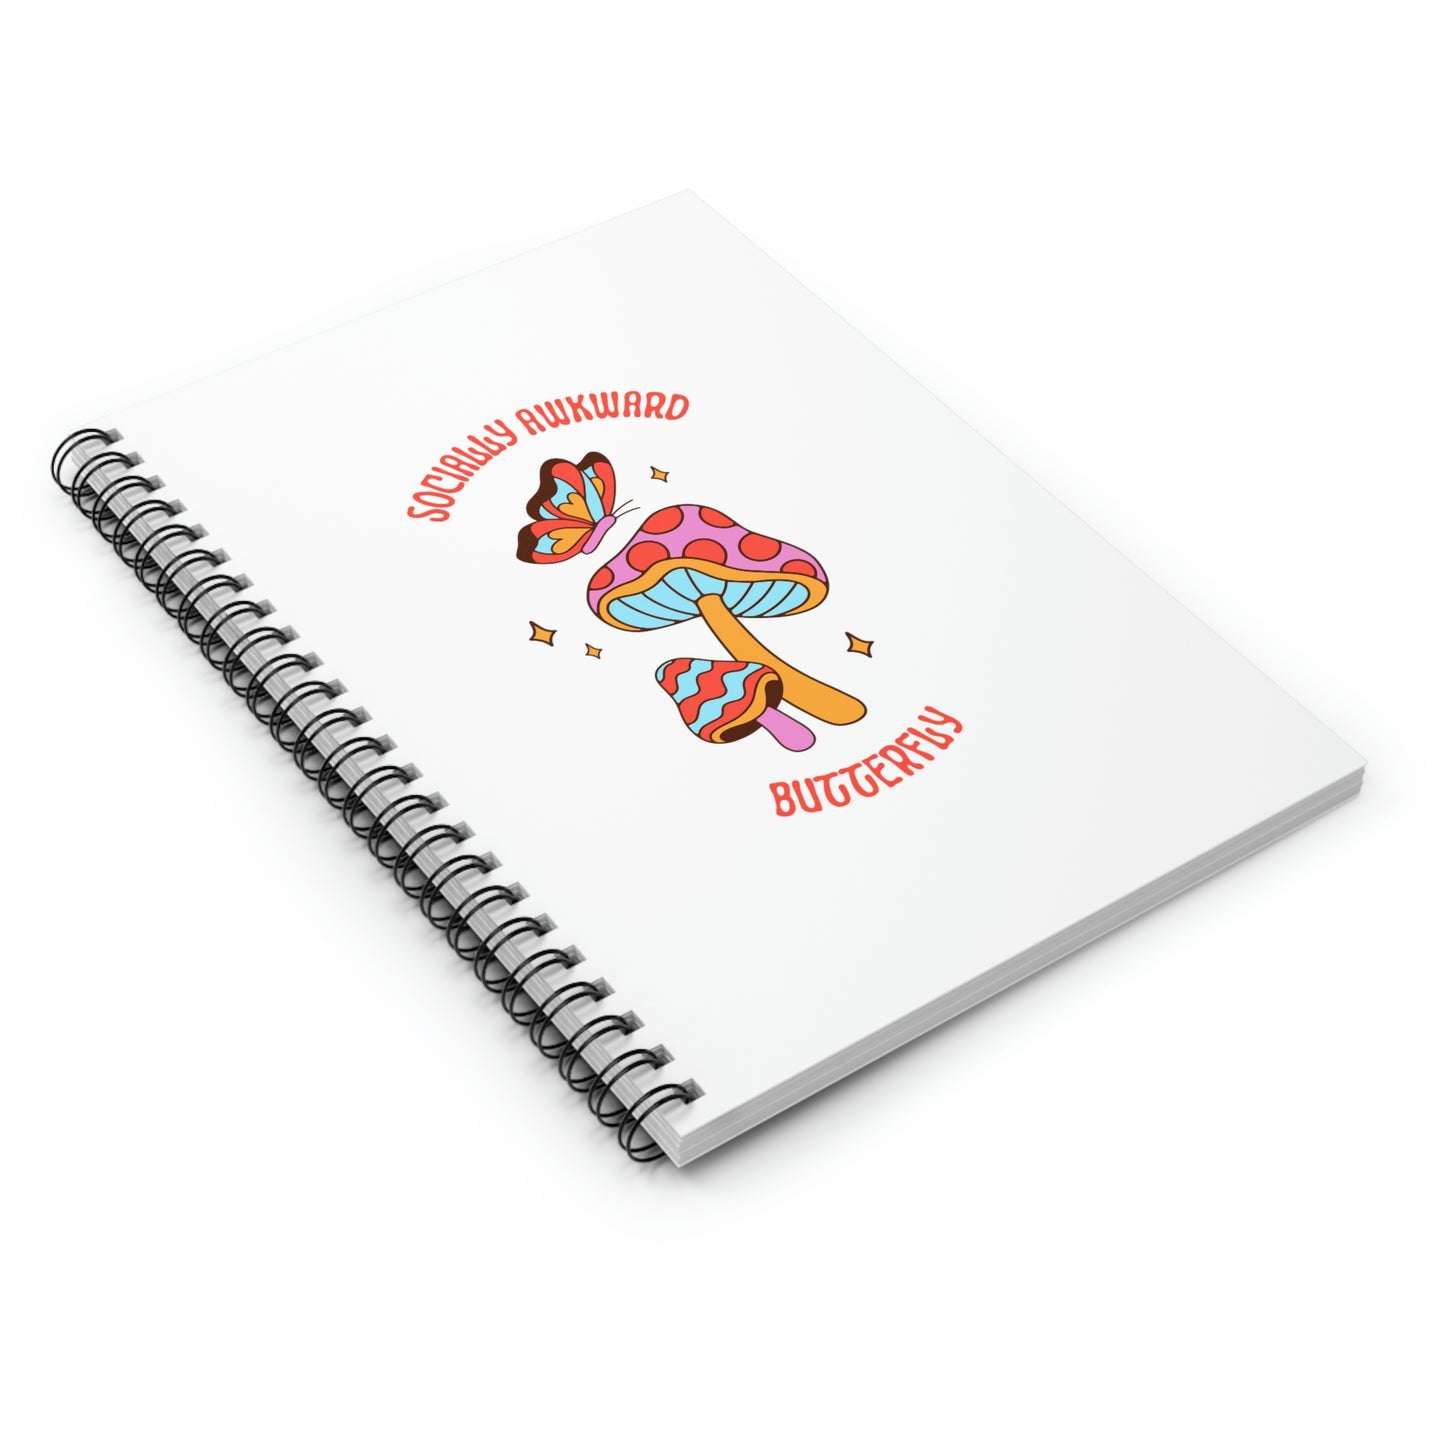 Socially Awkward Butterfly Spiral Notebook - Ruled Line